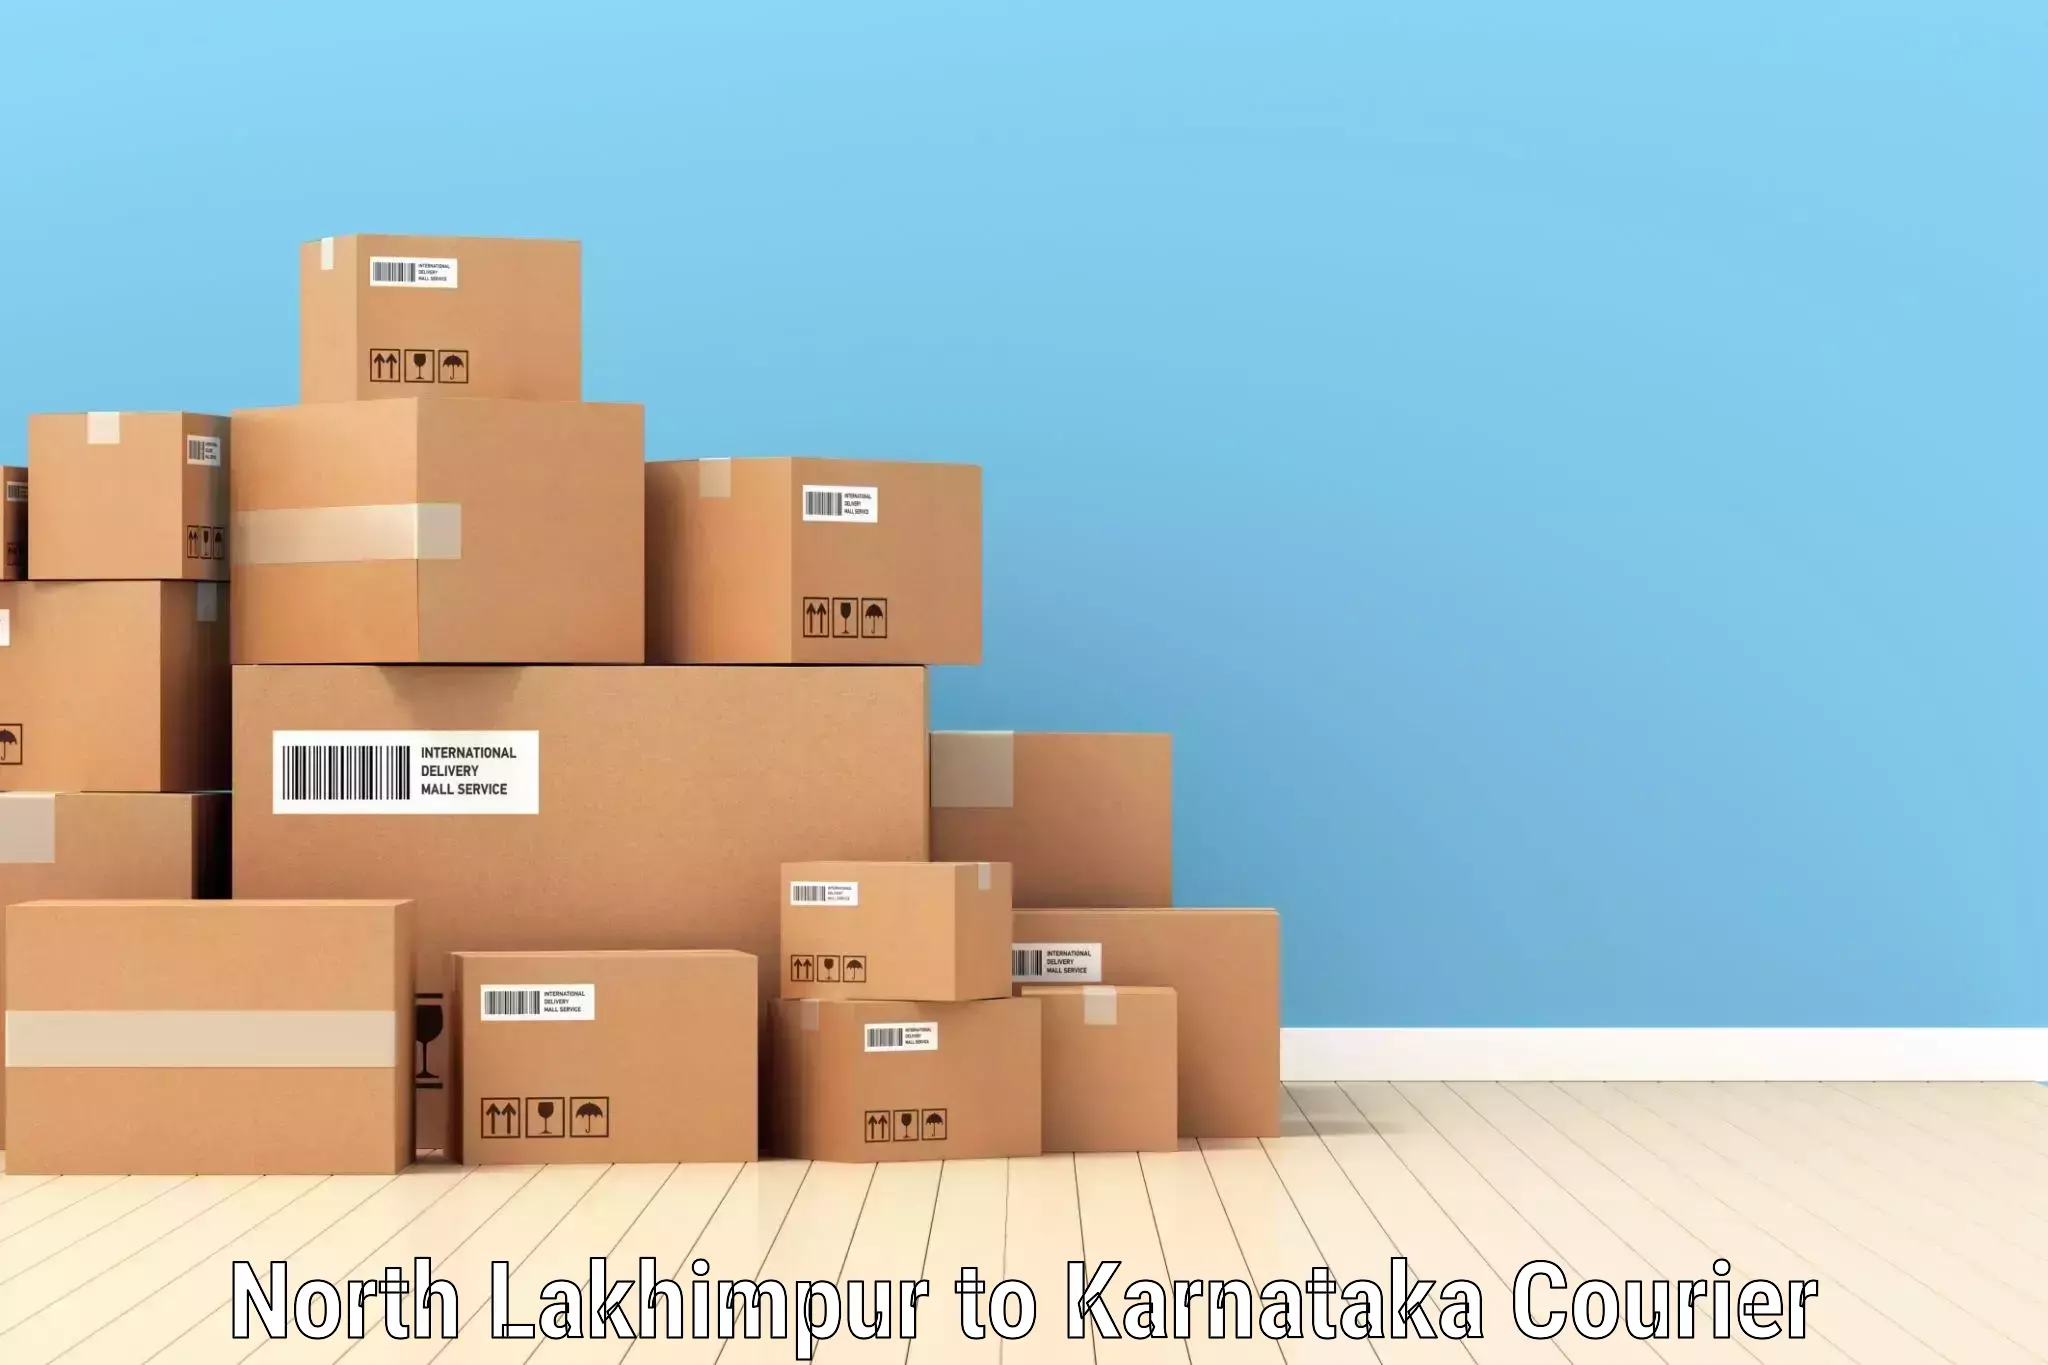 Express courier facilities in North Lakhimpur to Karnataka